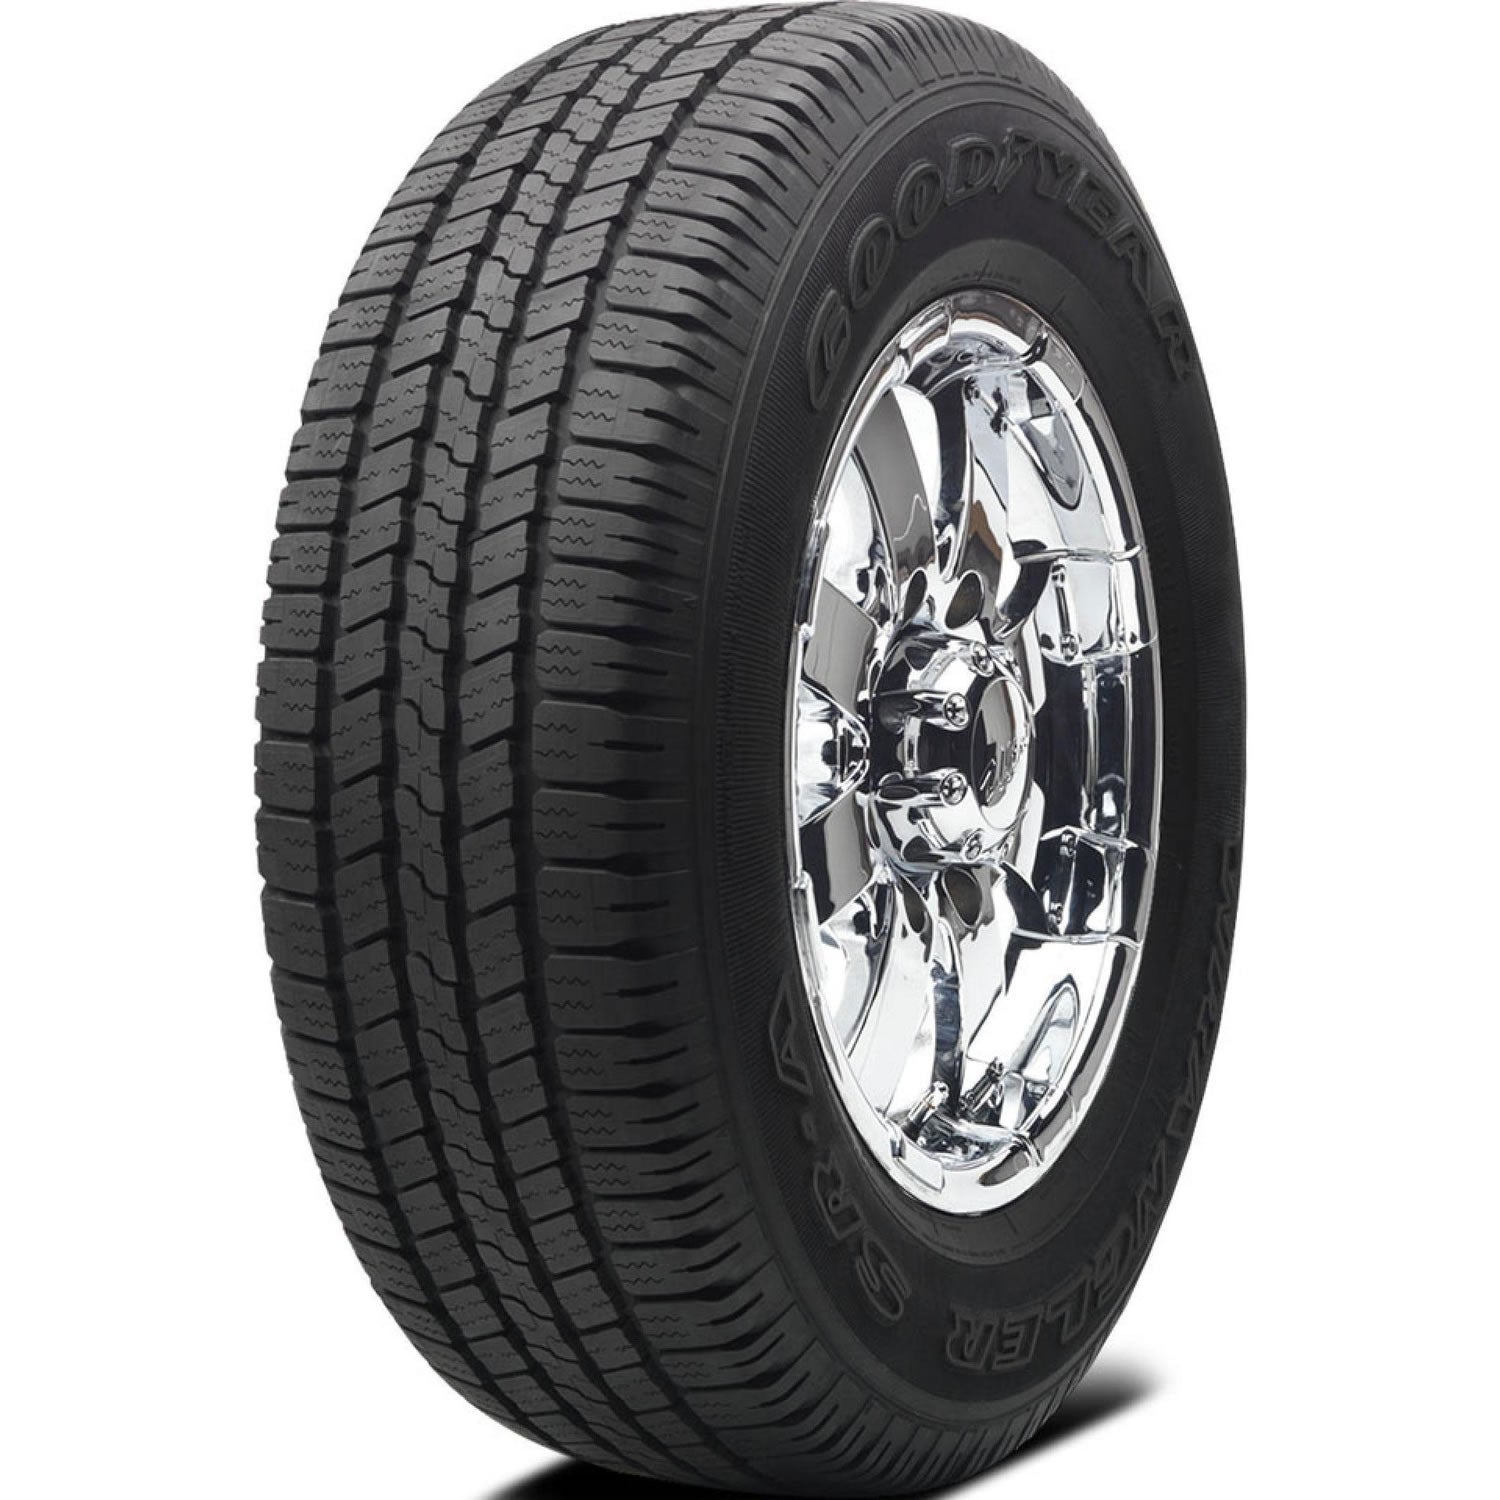 GOODYEAR WRANGLER SR-A LT245/75R16 (30.5X9.8R 16) Tires